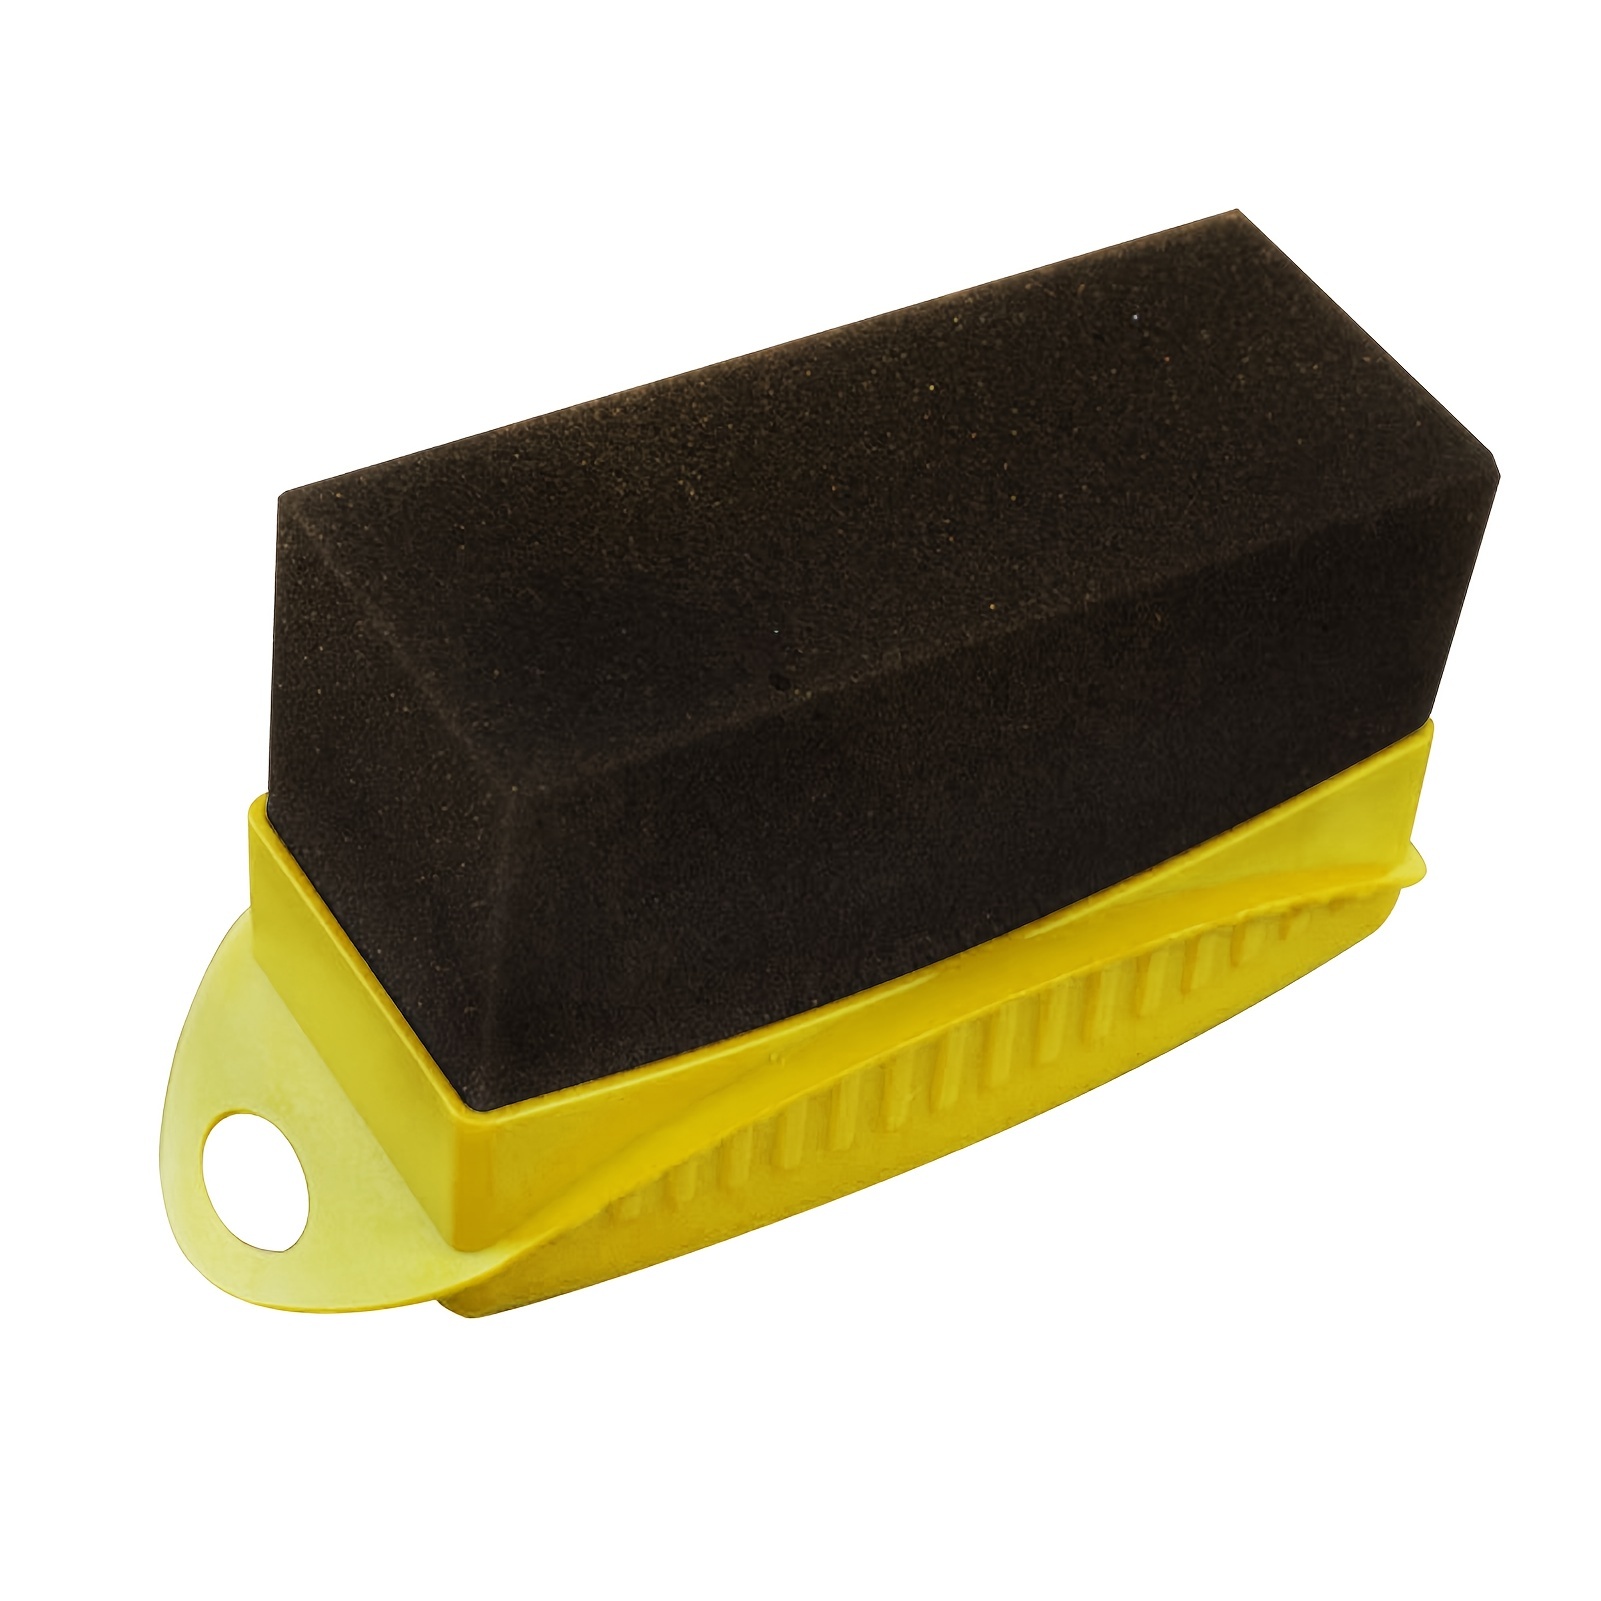 1x Yellow Corn Detailing Clean Tool Car Auto Wheel Tire Rim Cleaner Brush  Sponge